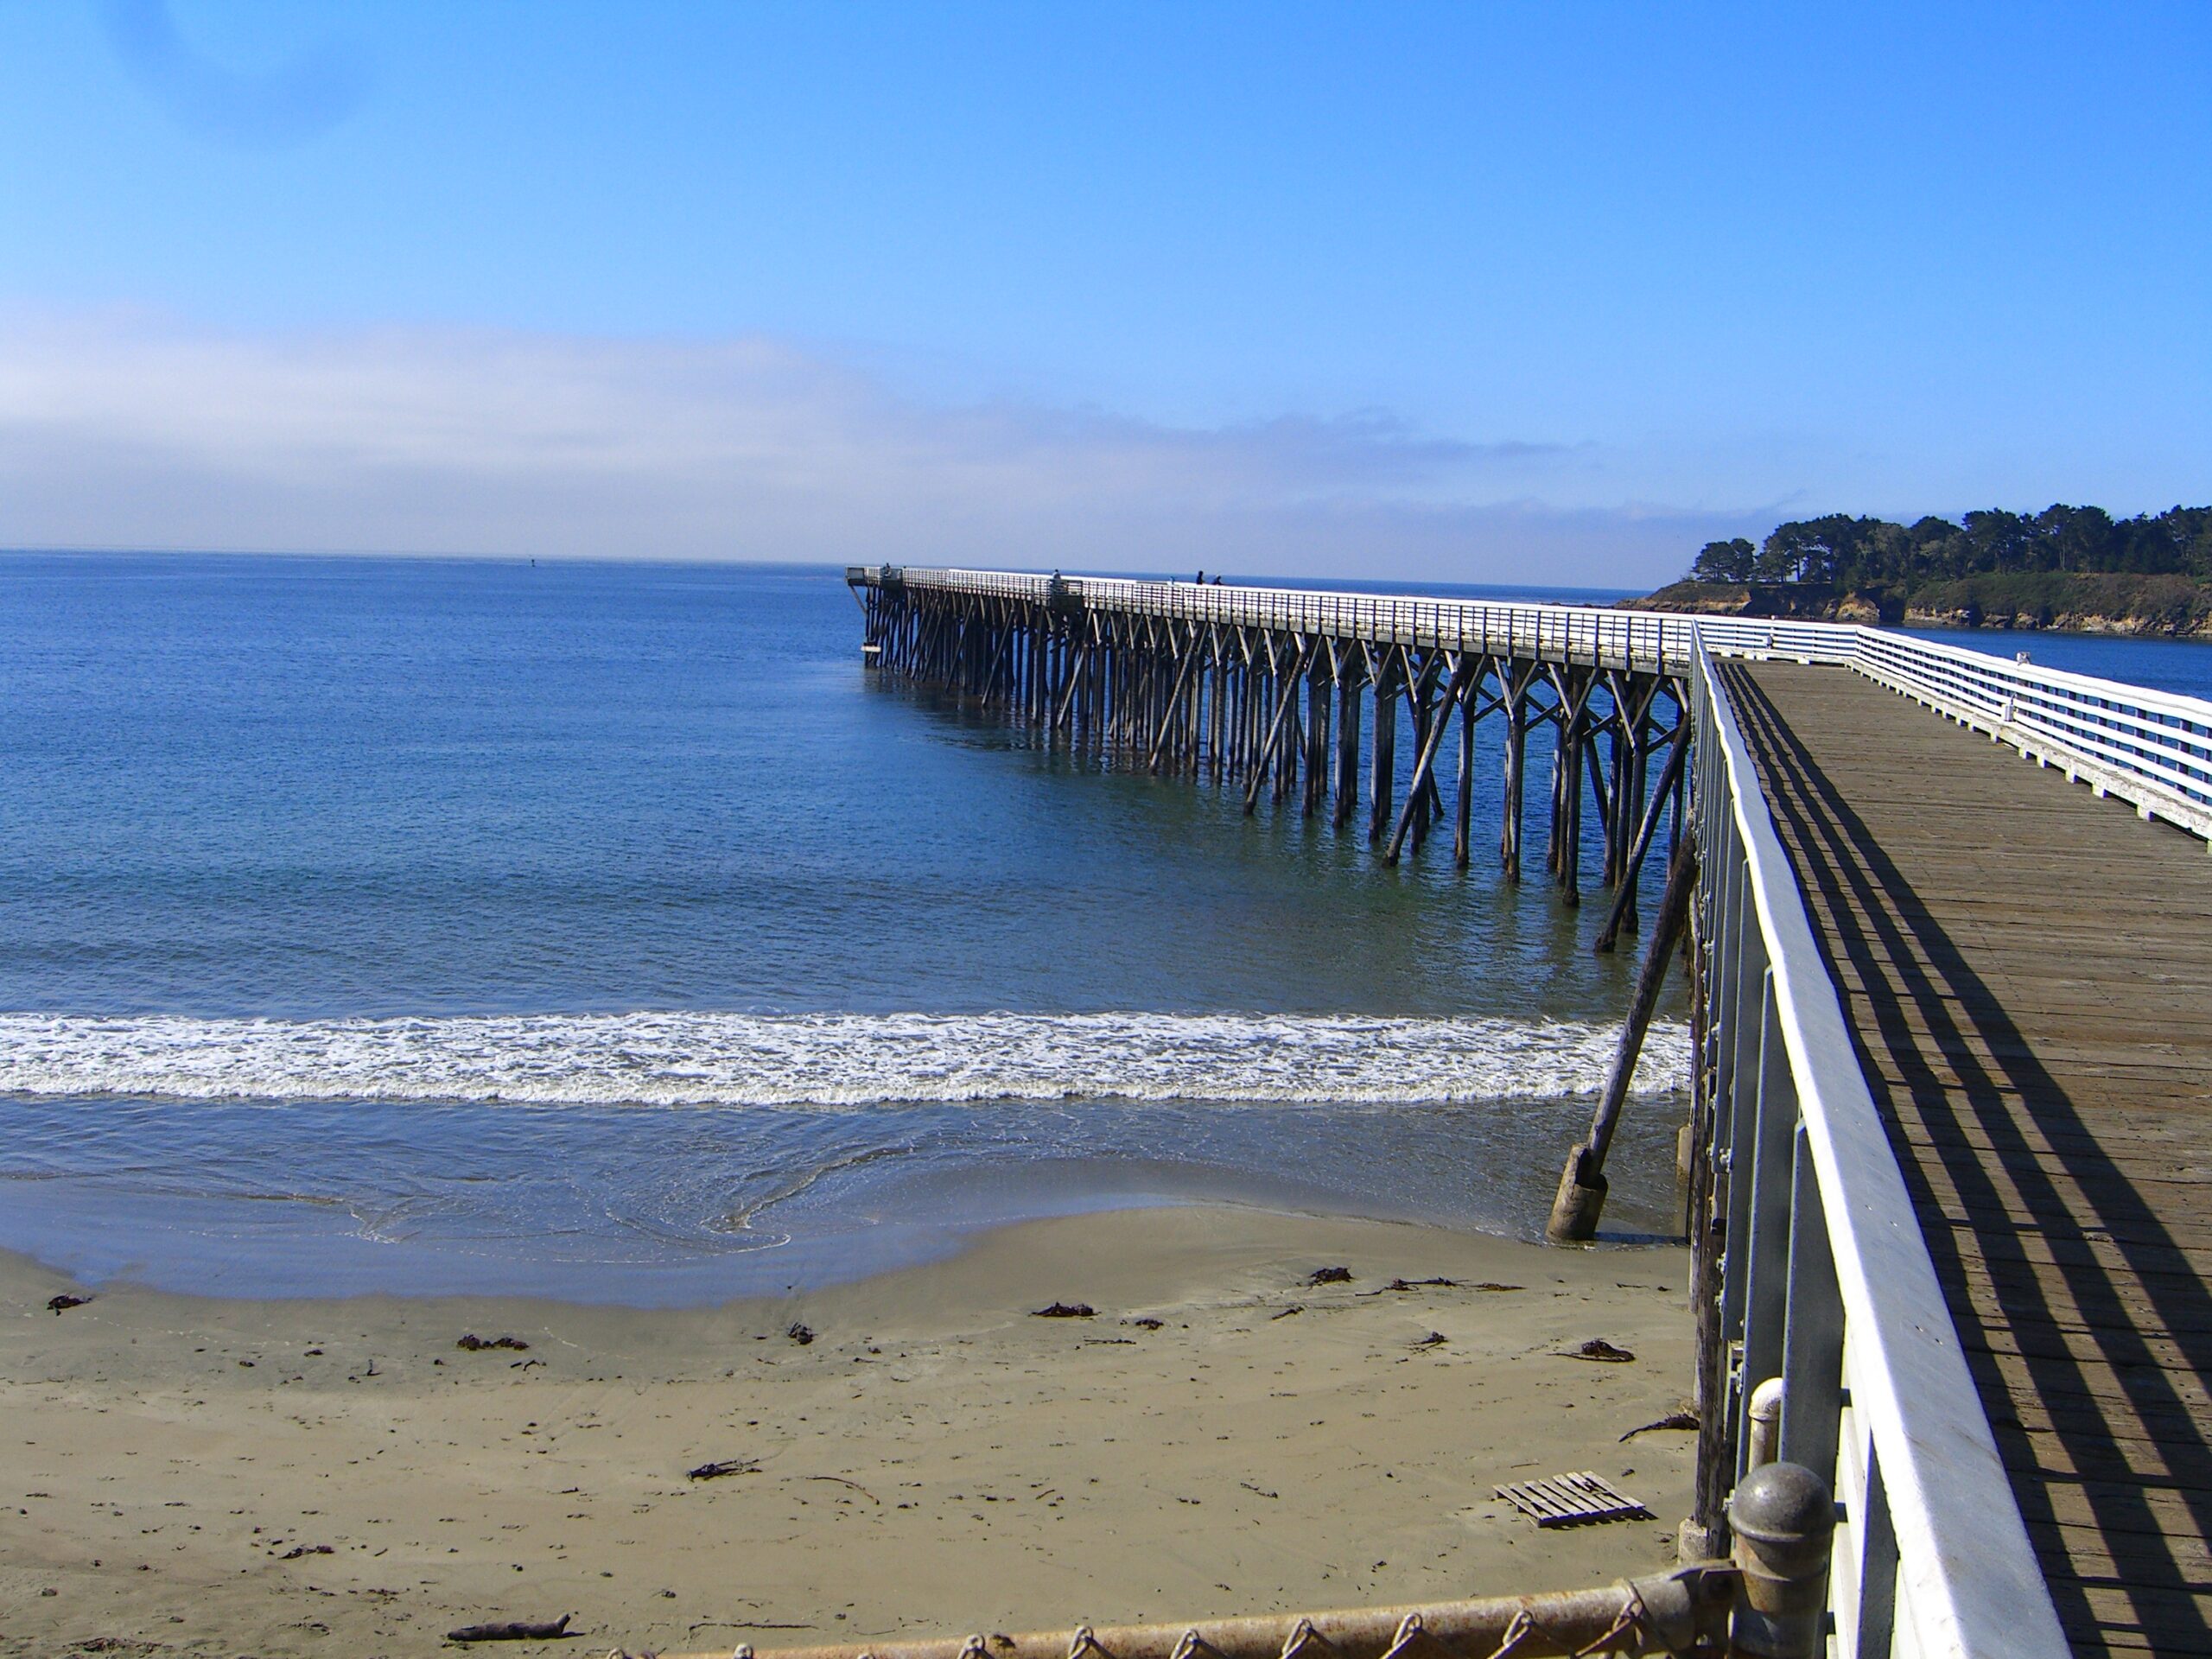 San Simeon Pier reaches into the Pacific Ocean from William R. Hearst Memorial State Beach in California.